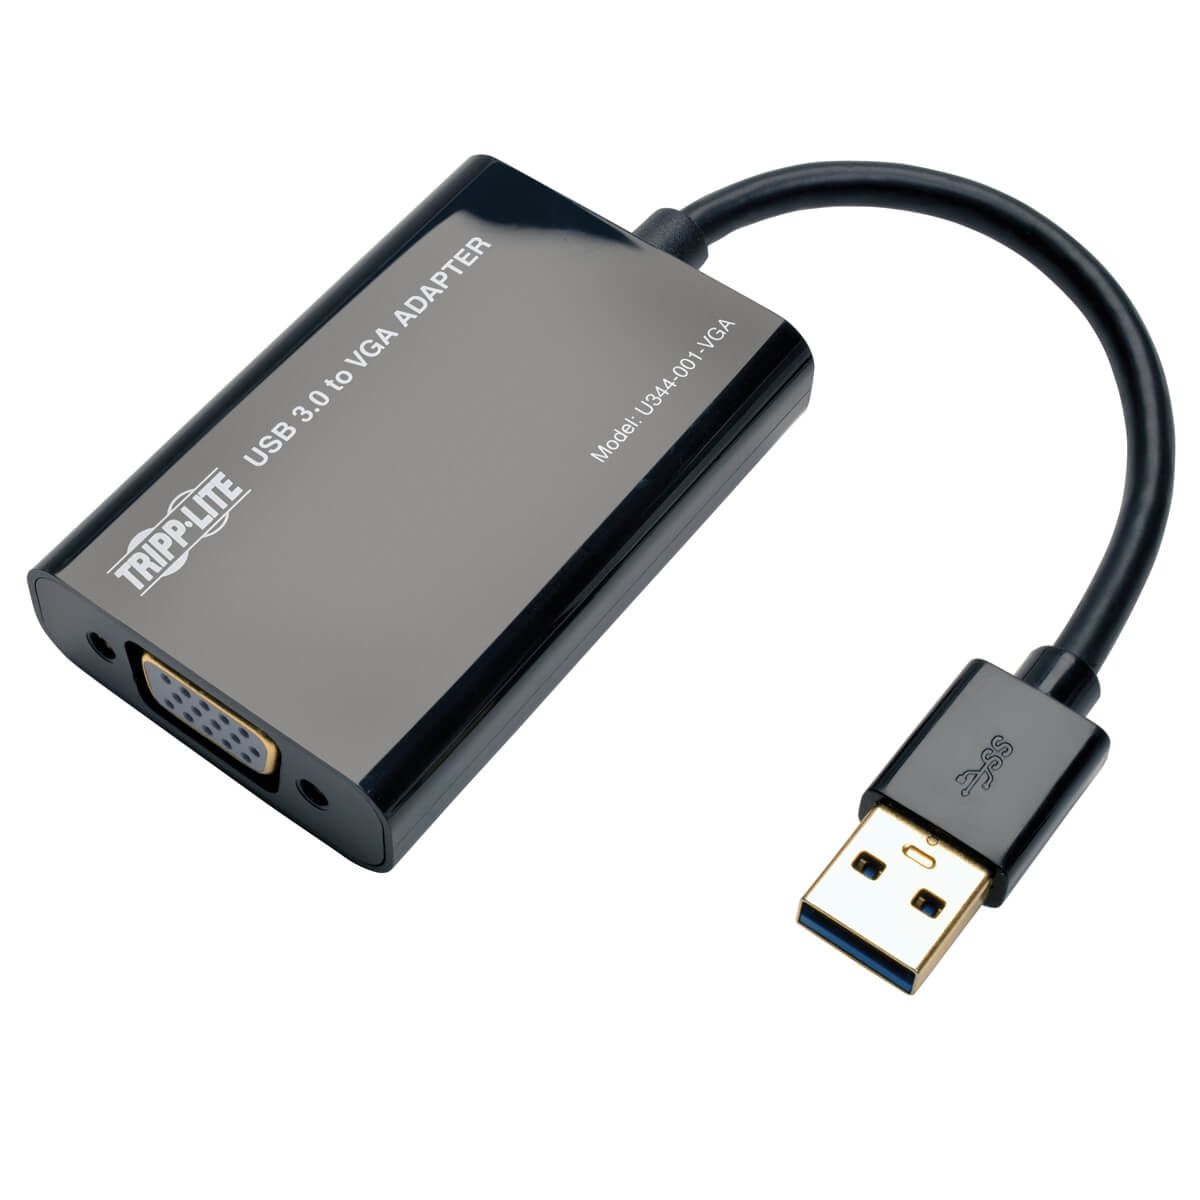 TrippLite Adaptador USB-C Hembra a USB-A Macho 3.0